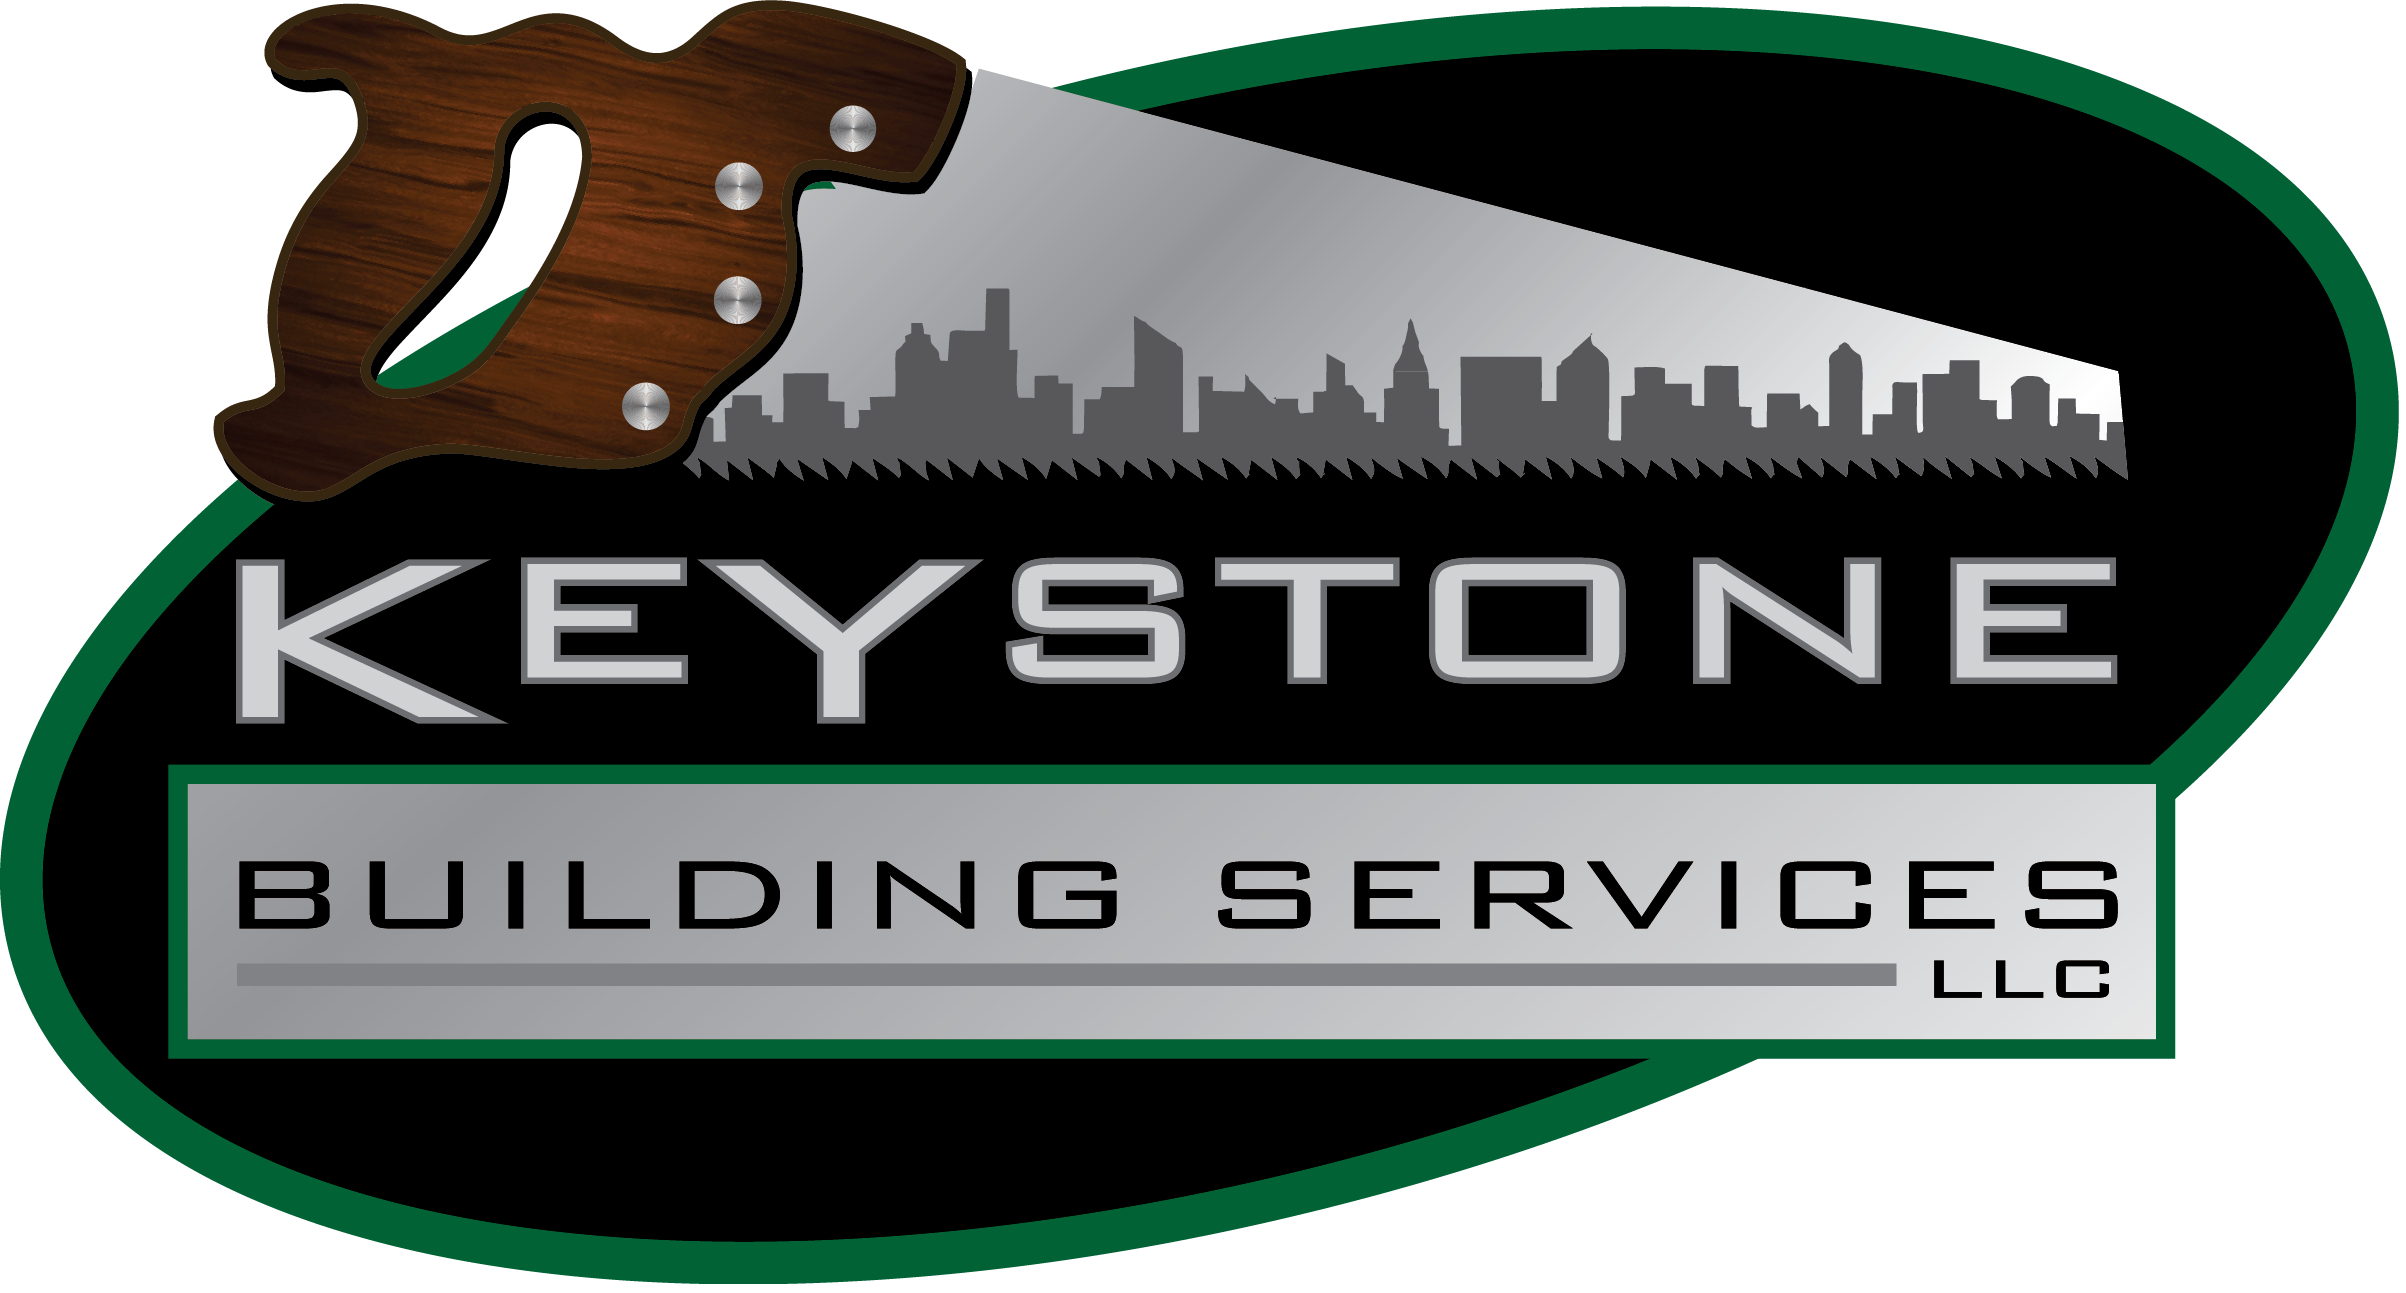 Keystone Building Services, Inc.